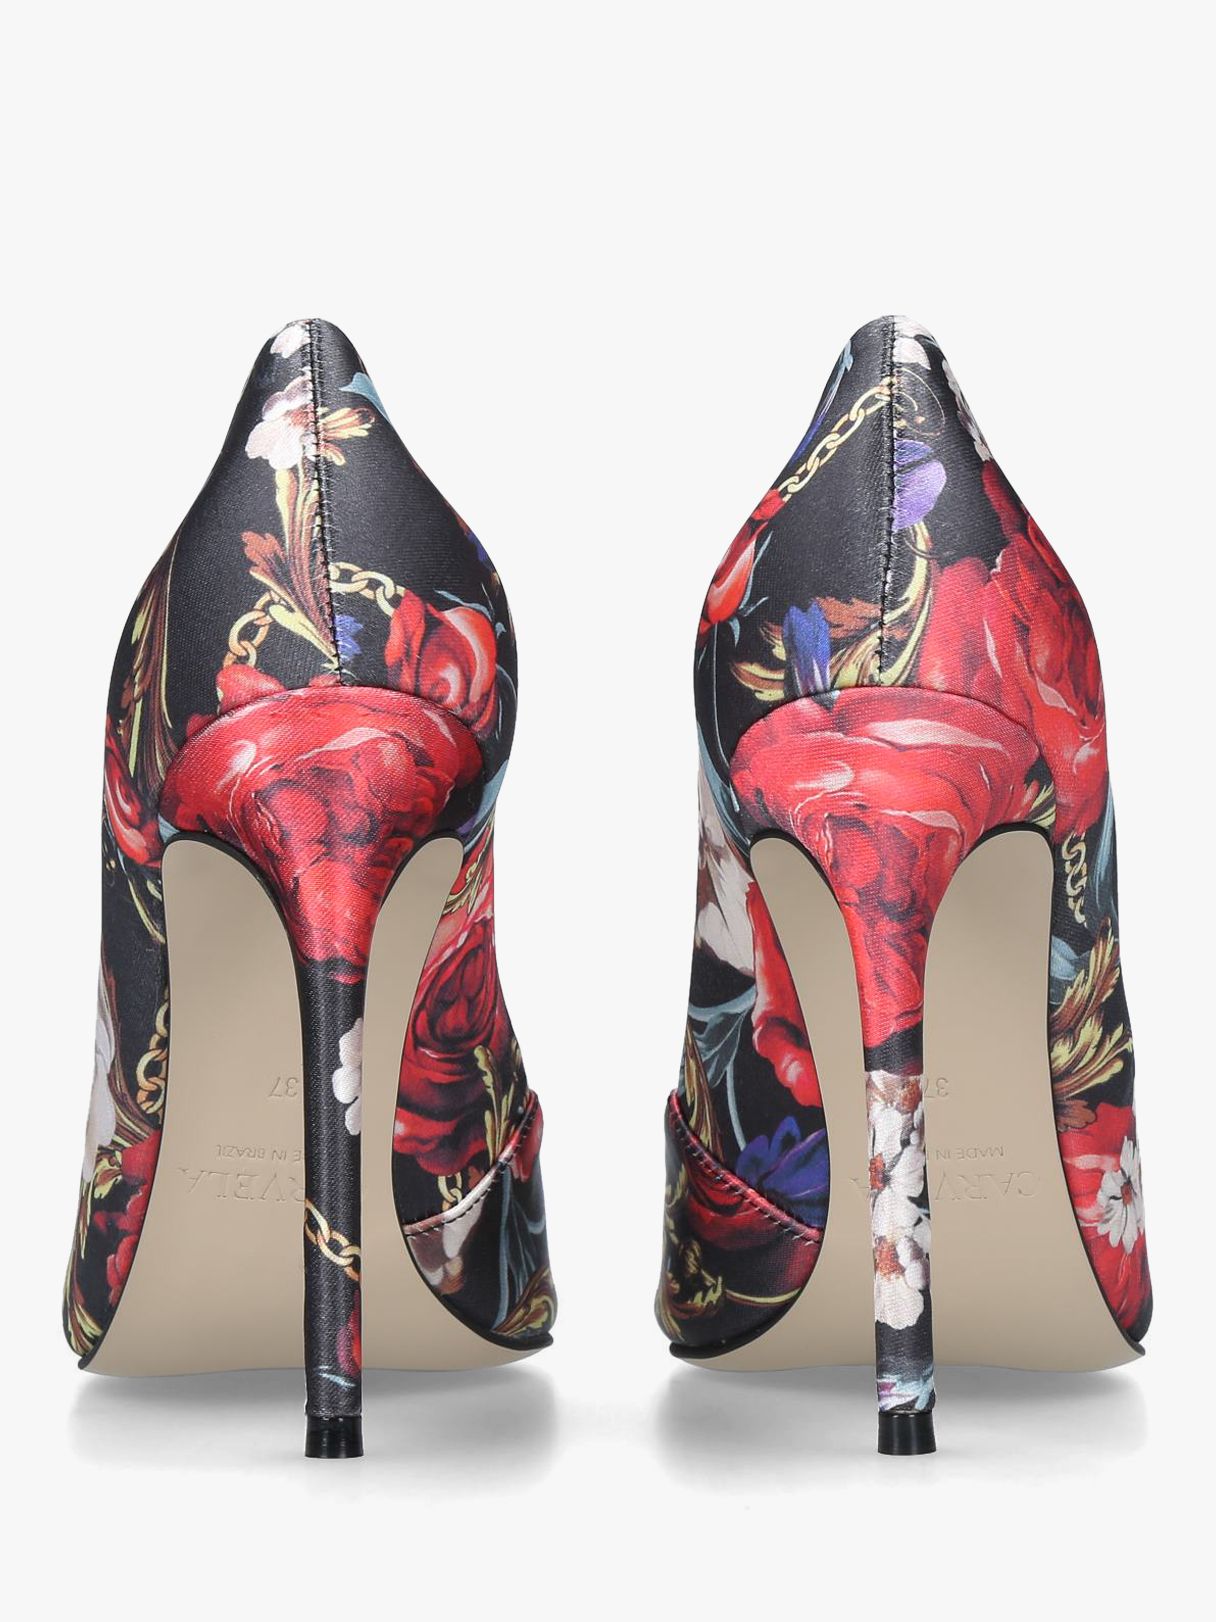 carvela alice heels